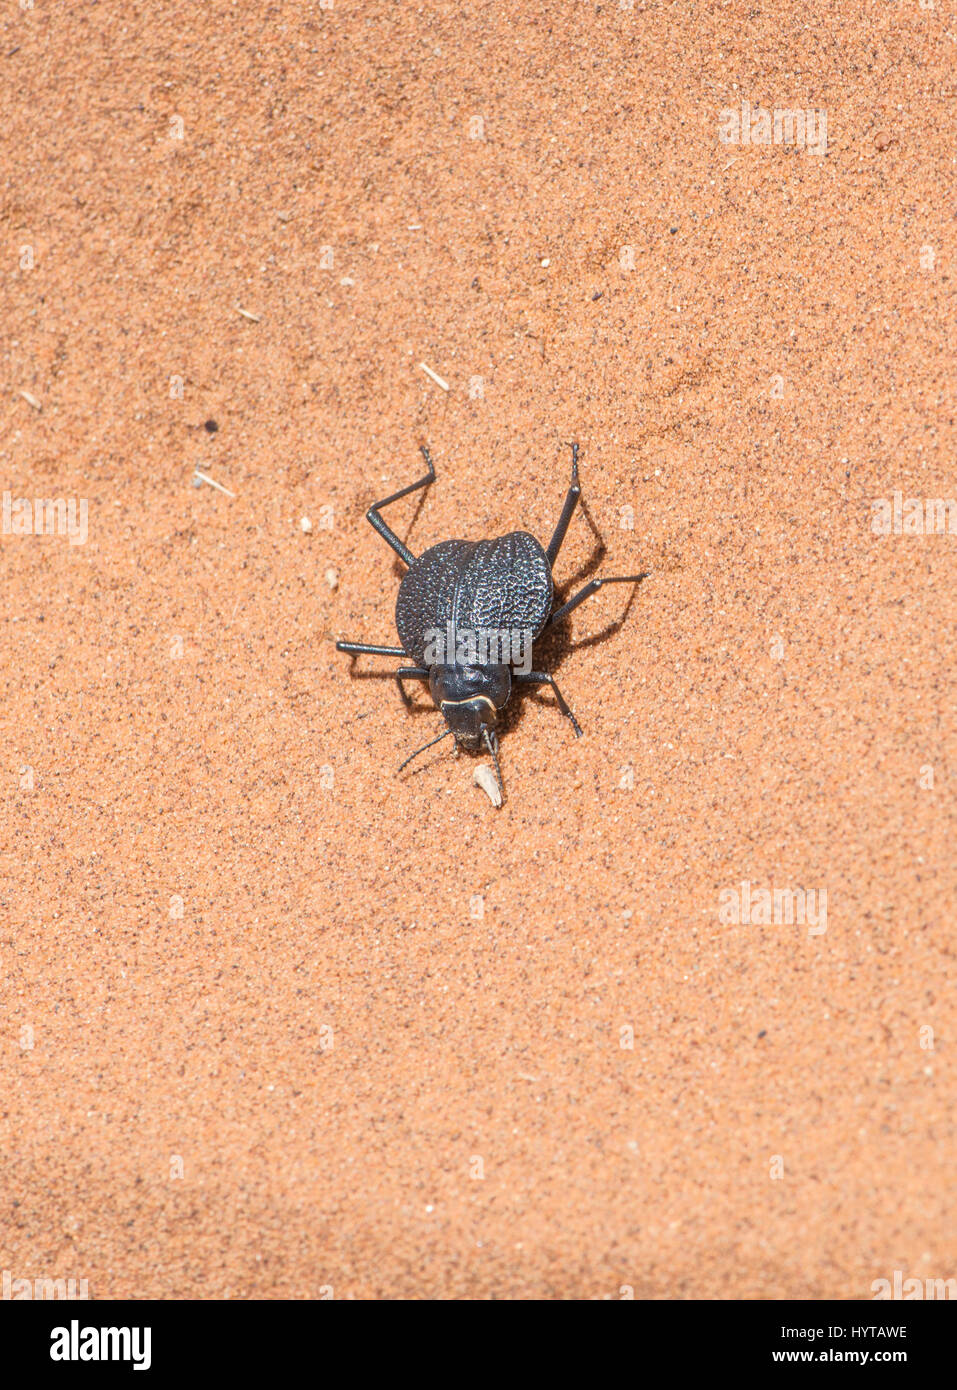 Darkling beetle, Onymacris plana, Sossusvlei, Désert du Namib, Namibie Banque D'Images